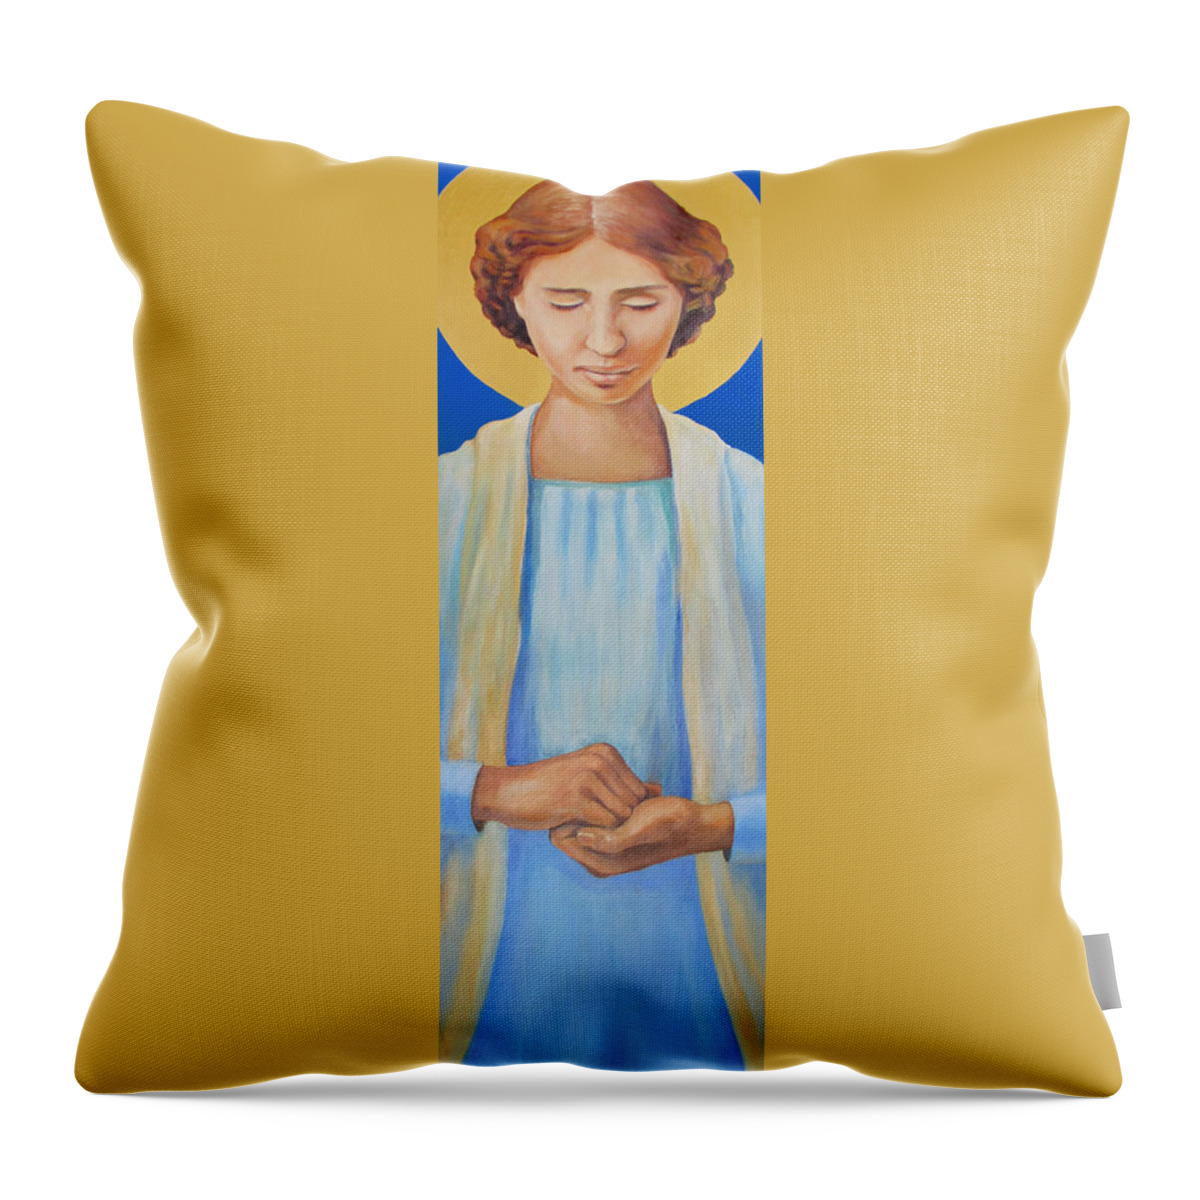 Helen Keller Throw Pillow featuring the painting Helen Keller by Linda Ruiz-Lozito